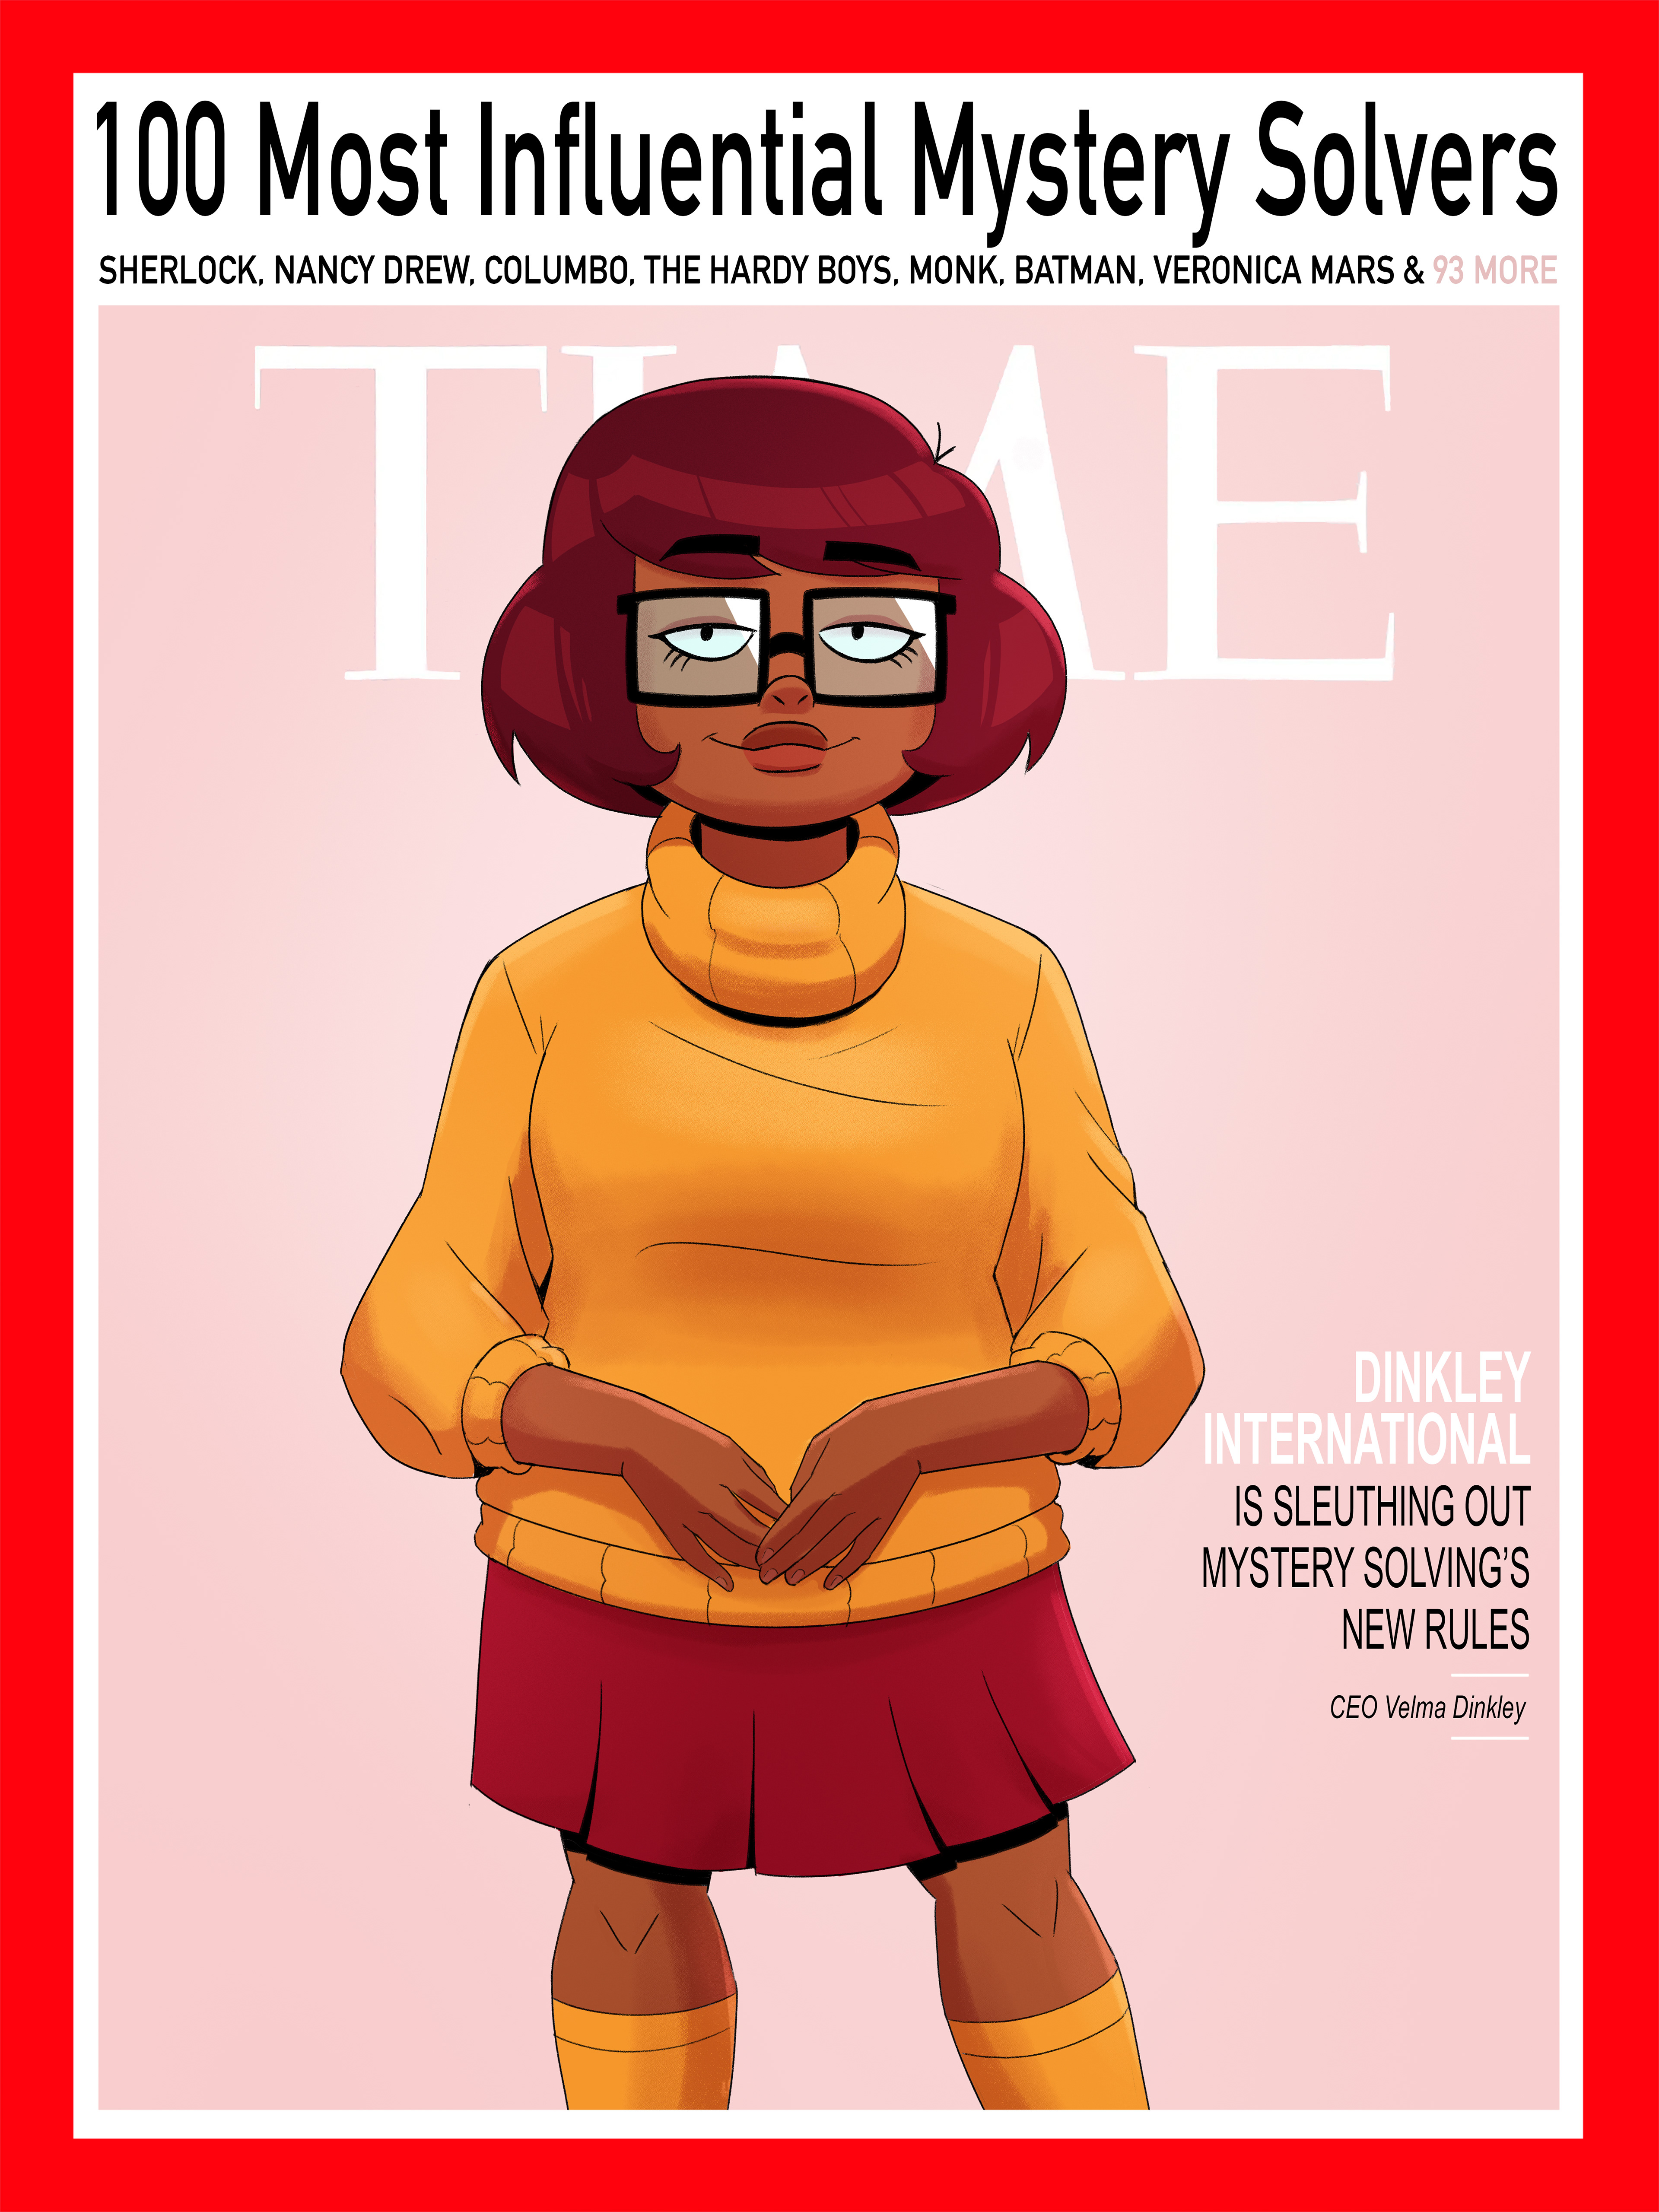 The creativity of 'Velma' // The Observer